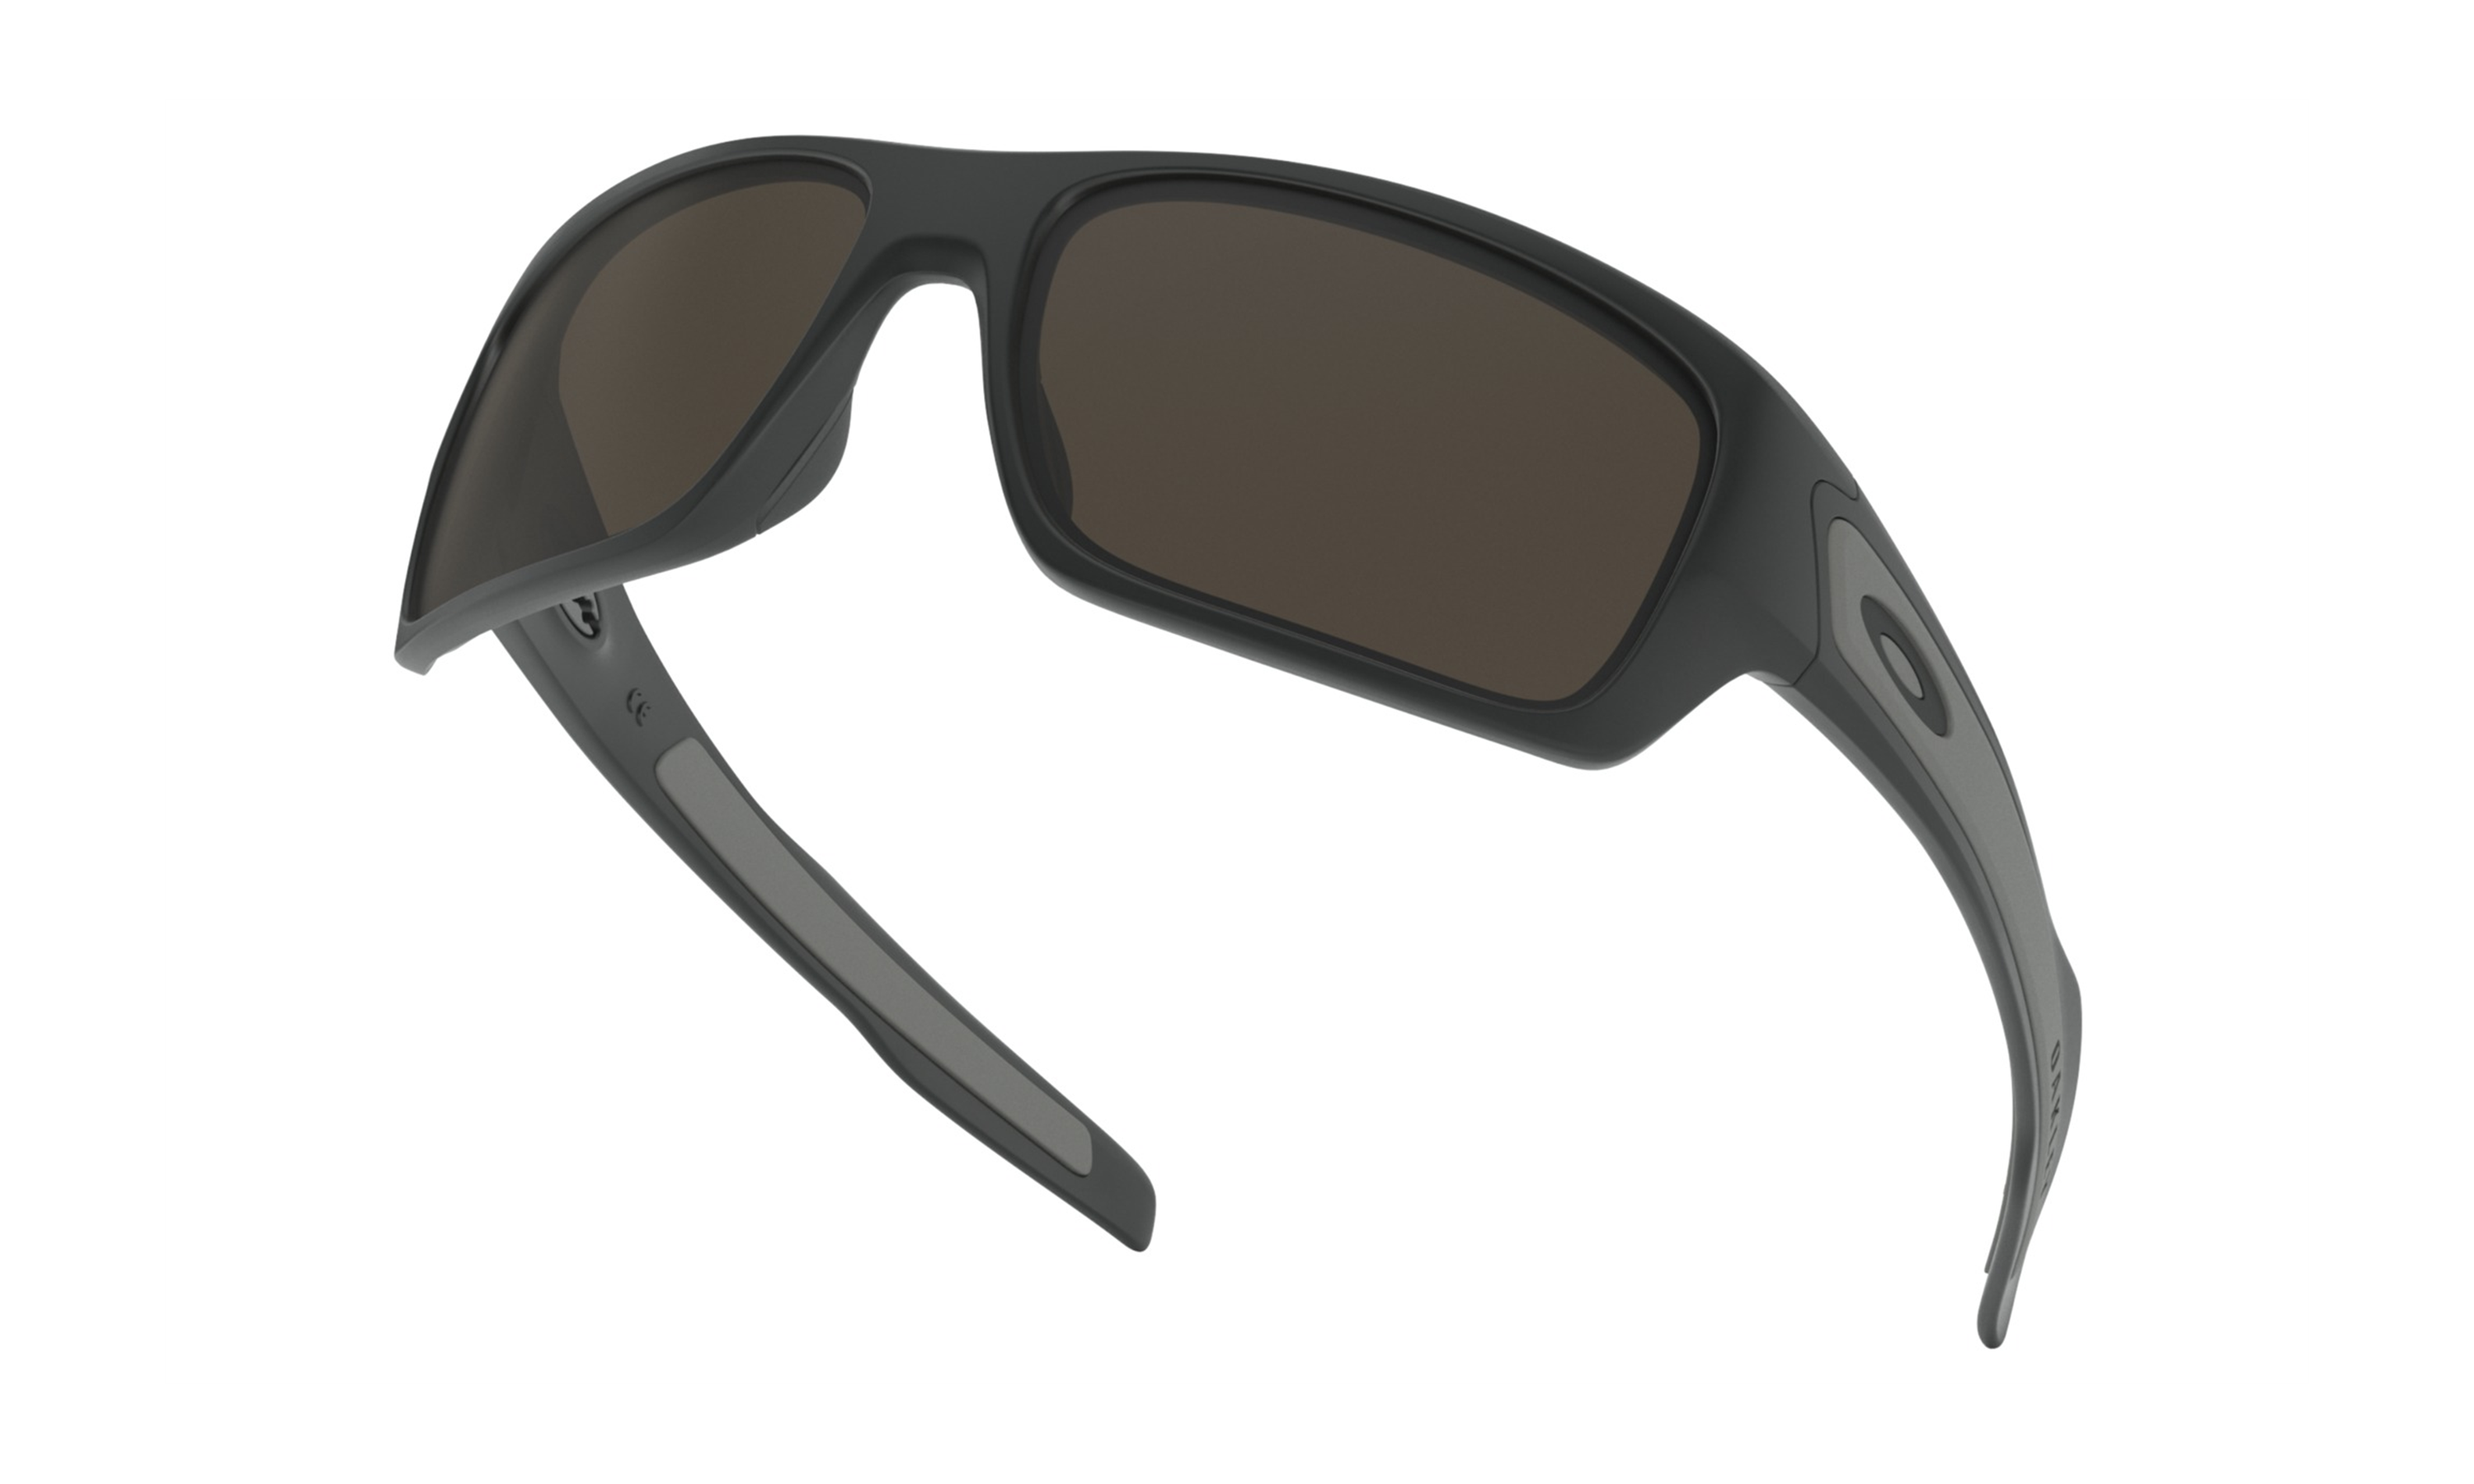 oakley oo9263 turbine matte olive sunglasses